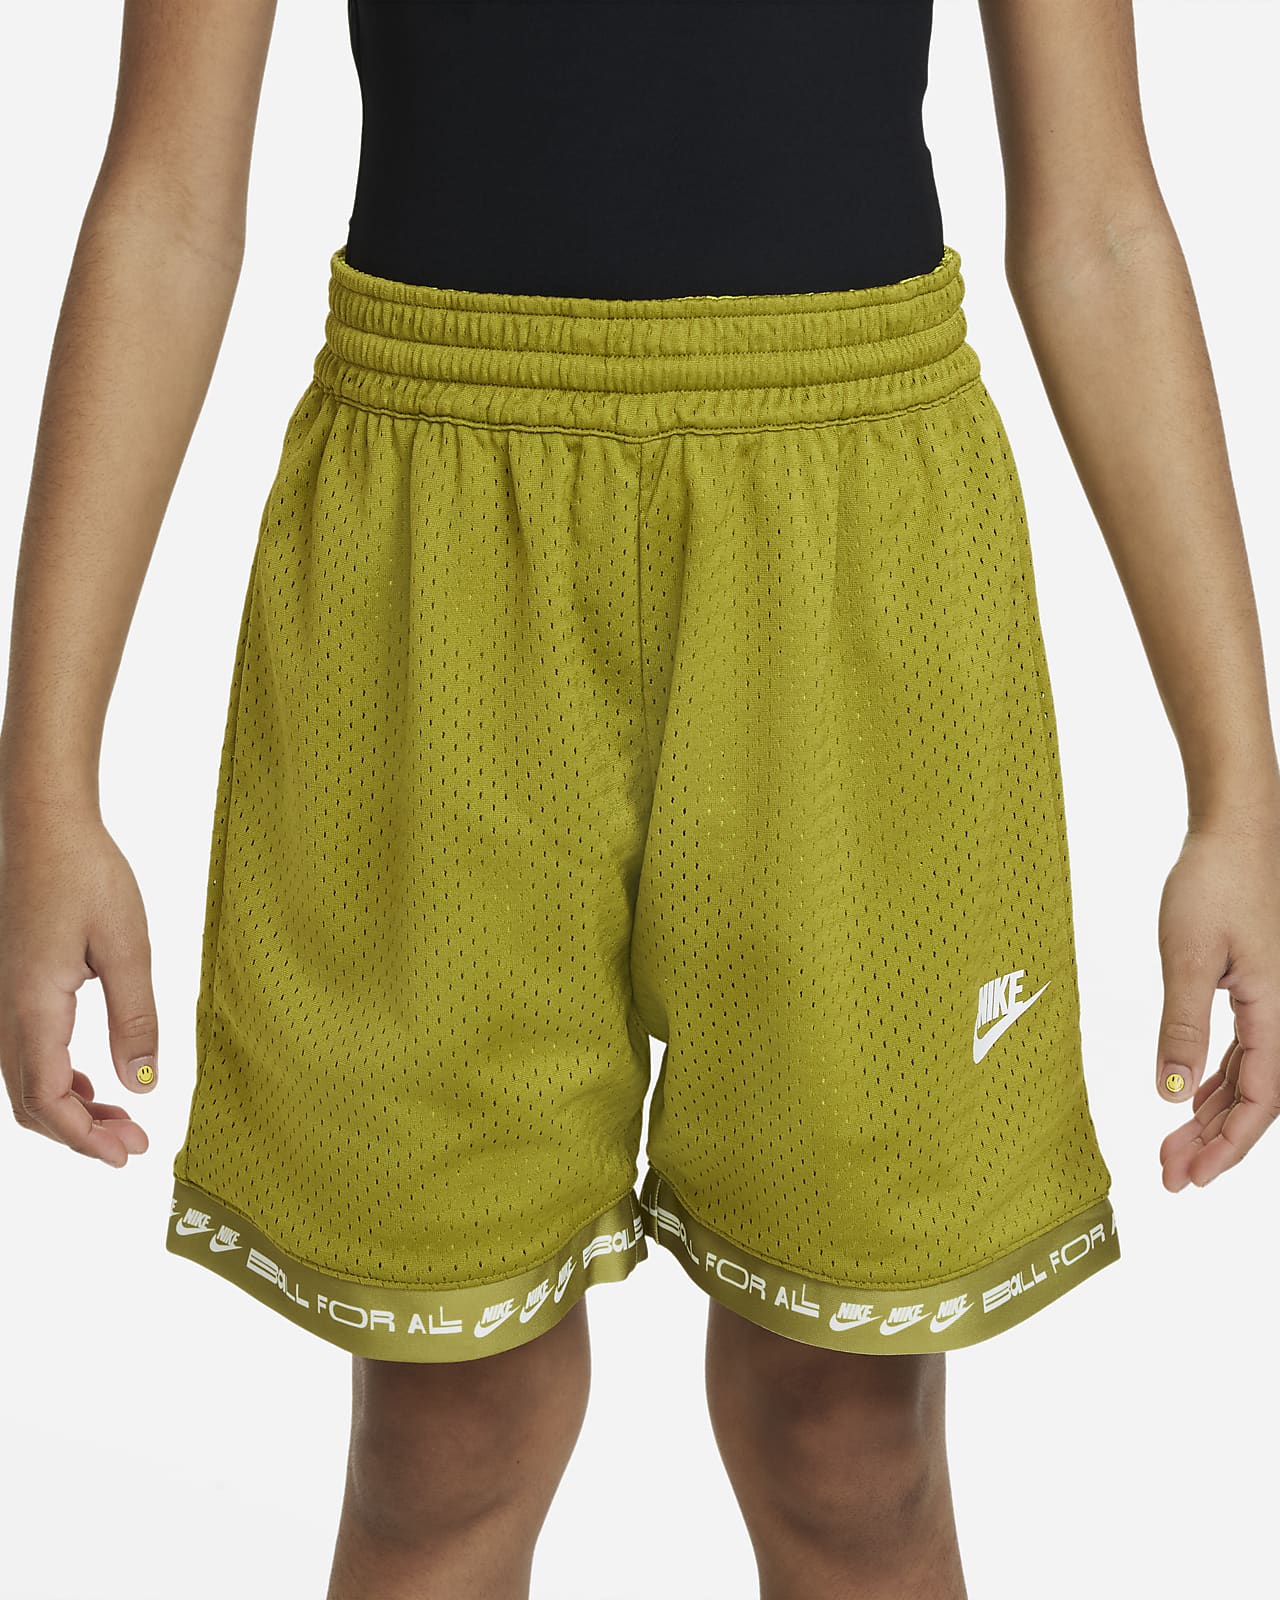 Nike Culture of Basketball Older Kids' Reversible Basketball Jersey. Nike ID